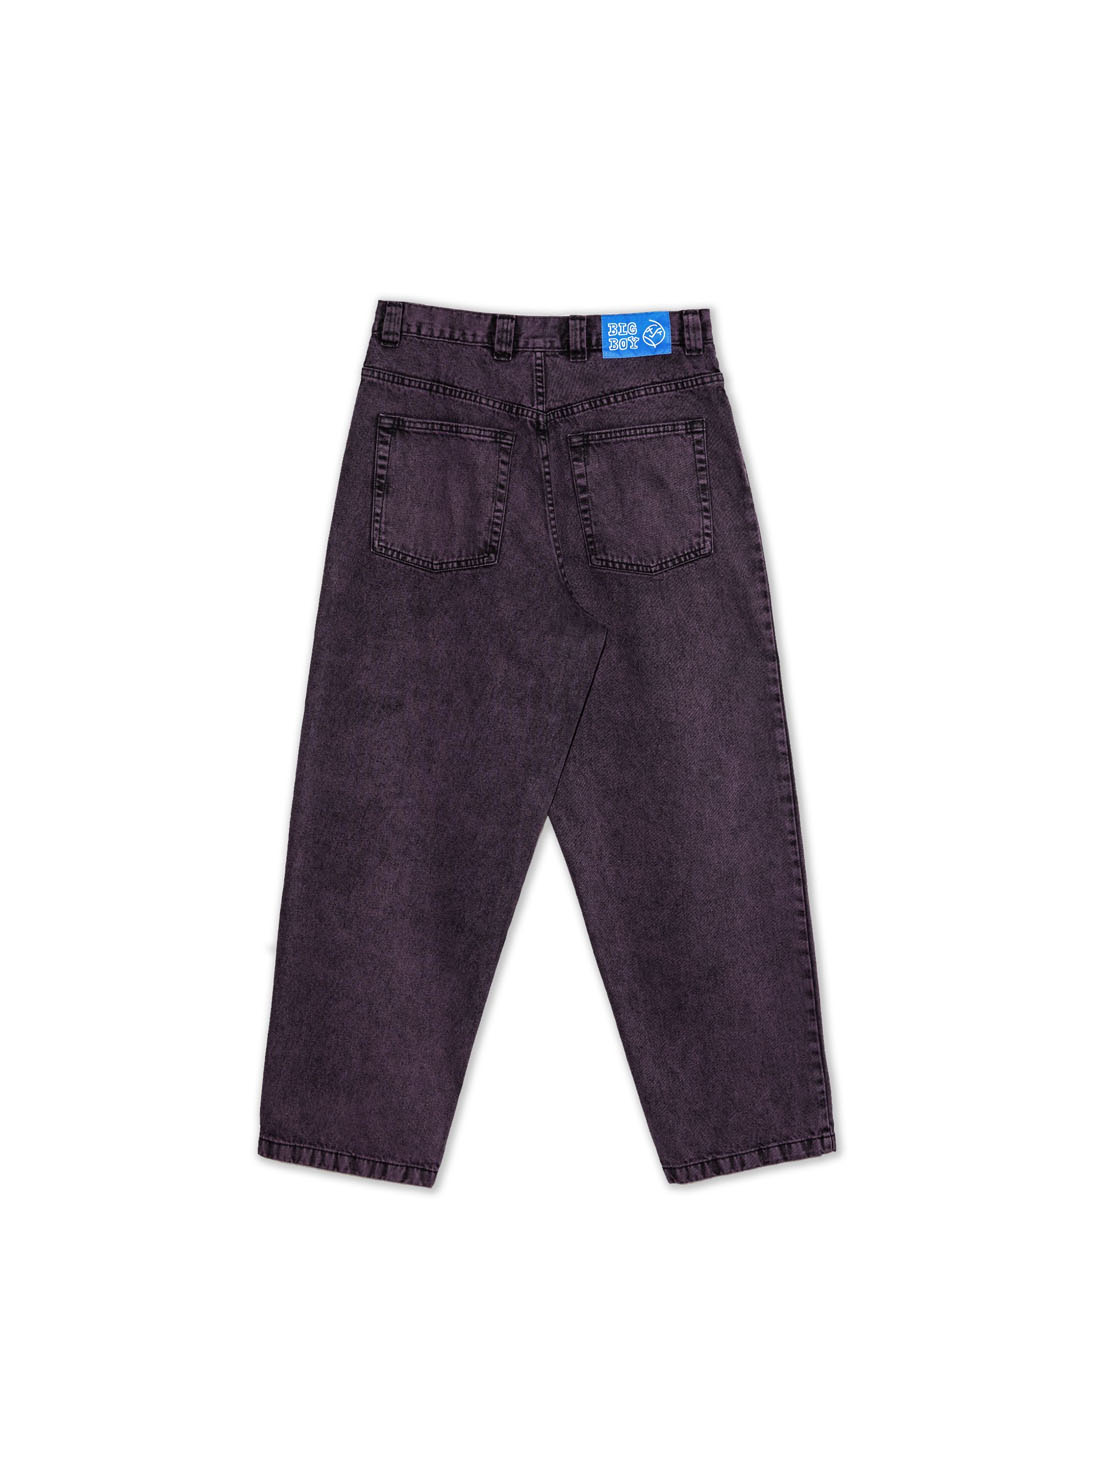 Polar Big Boy Jeans - Purple / Black - WeAreCivil.com